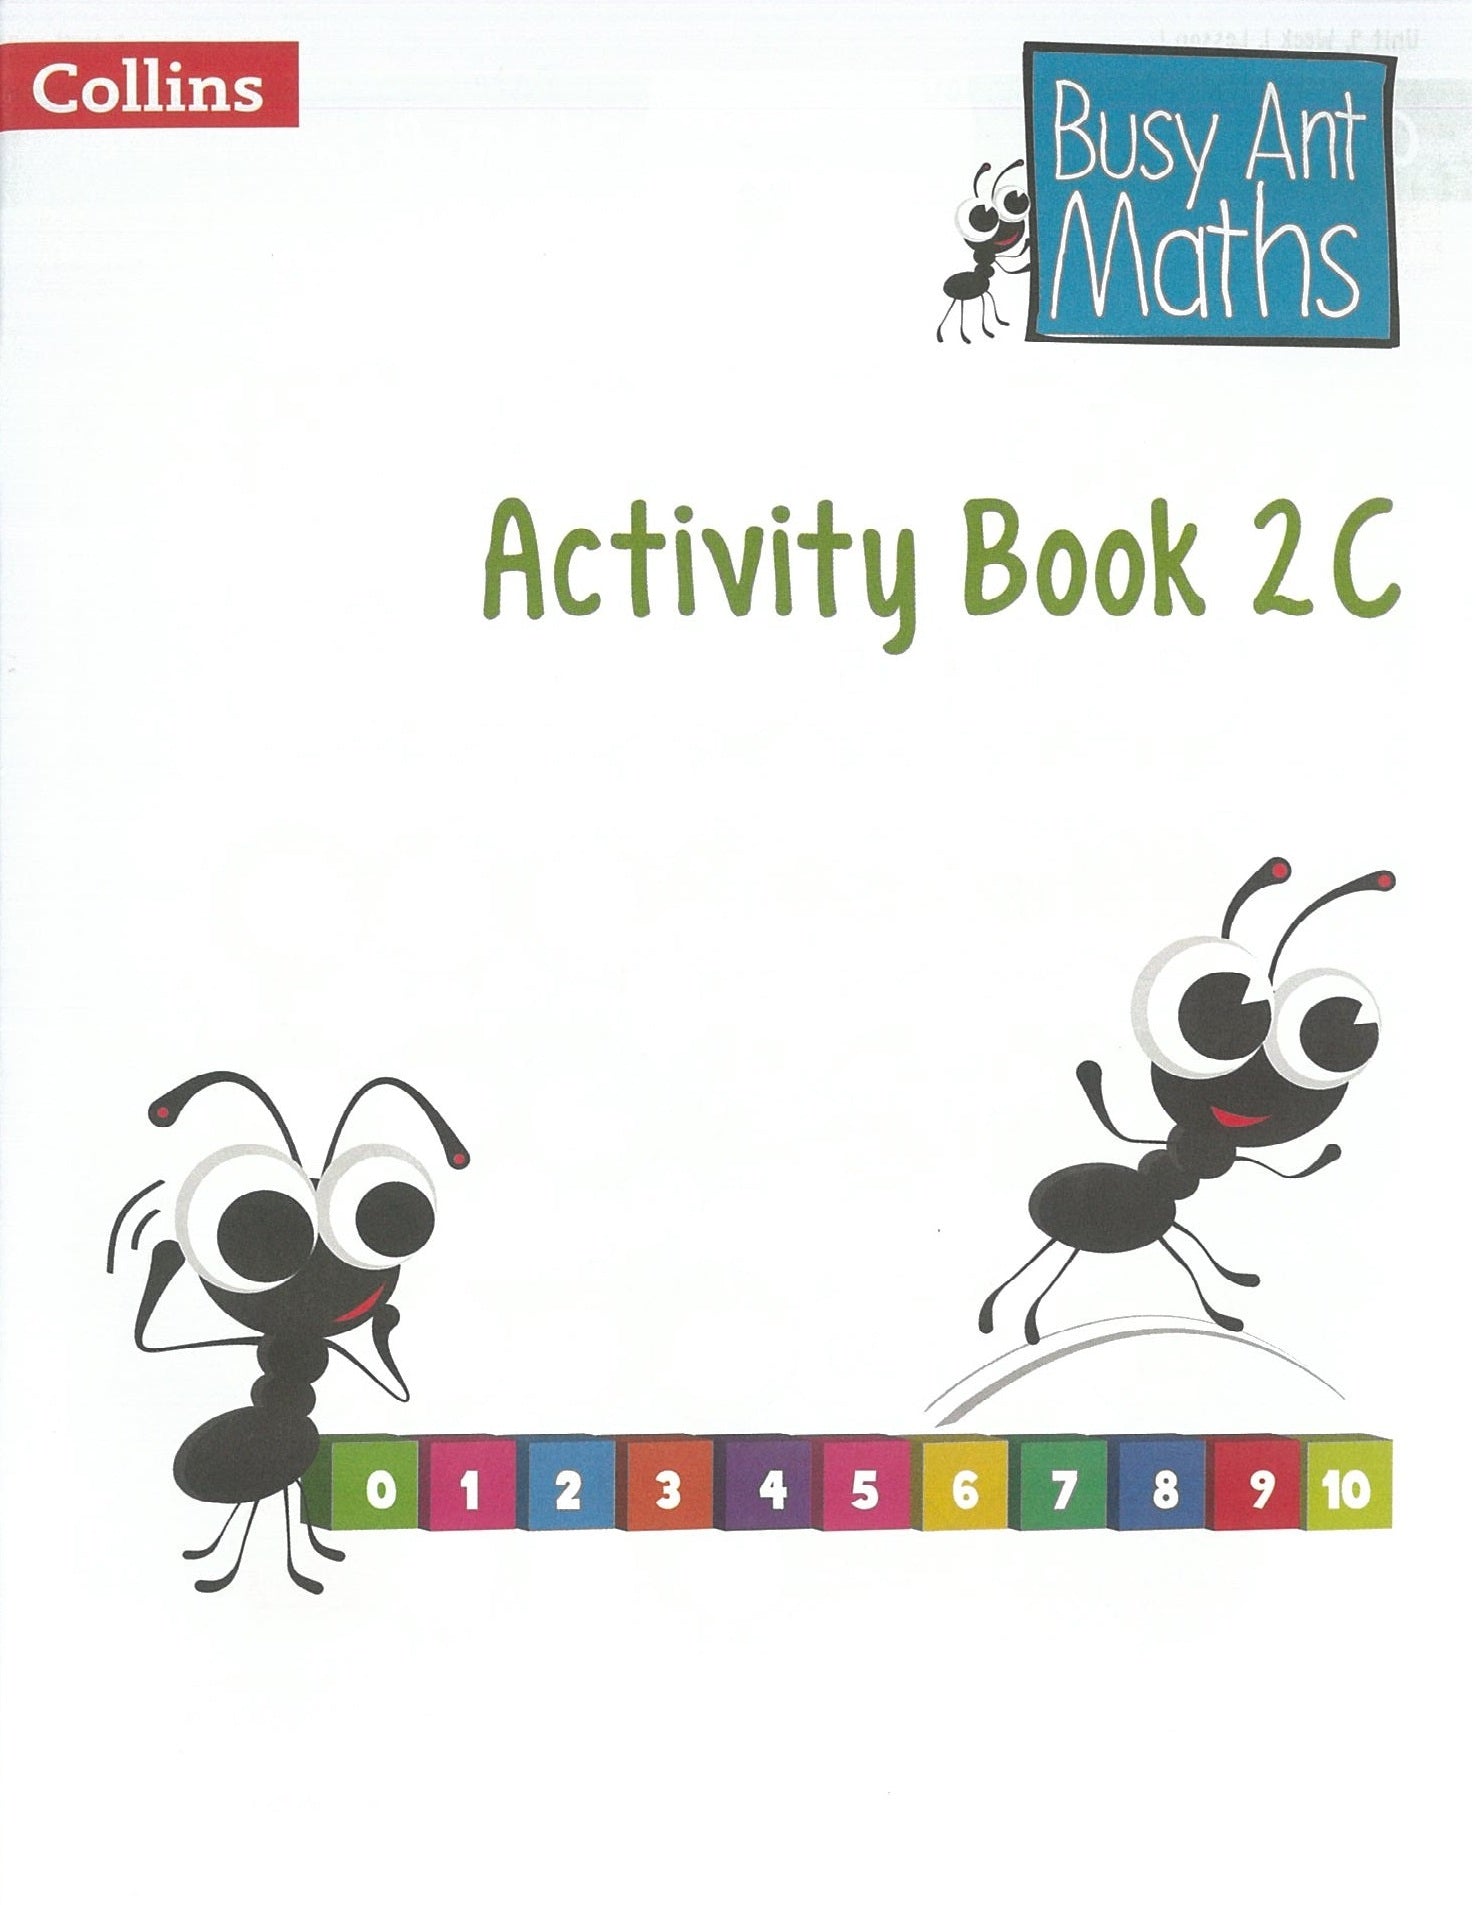 Busy Ant Maths - Year 2 Activity Book 2C - Nicola Morgan - 9780007568246 - HarperCollins